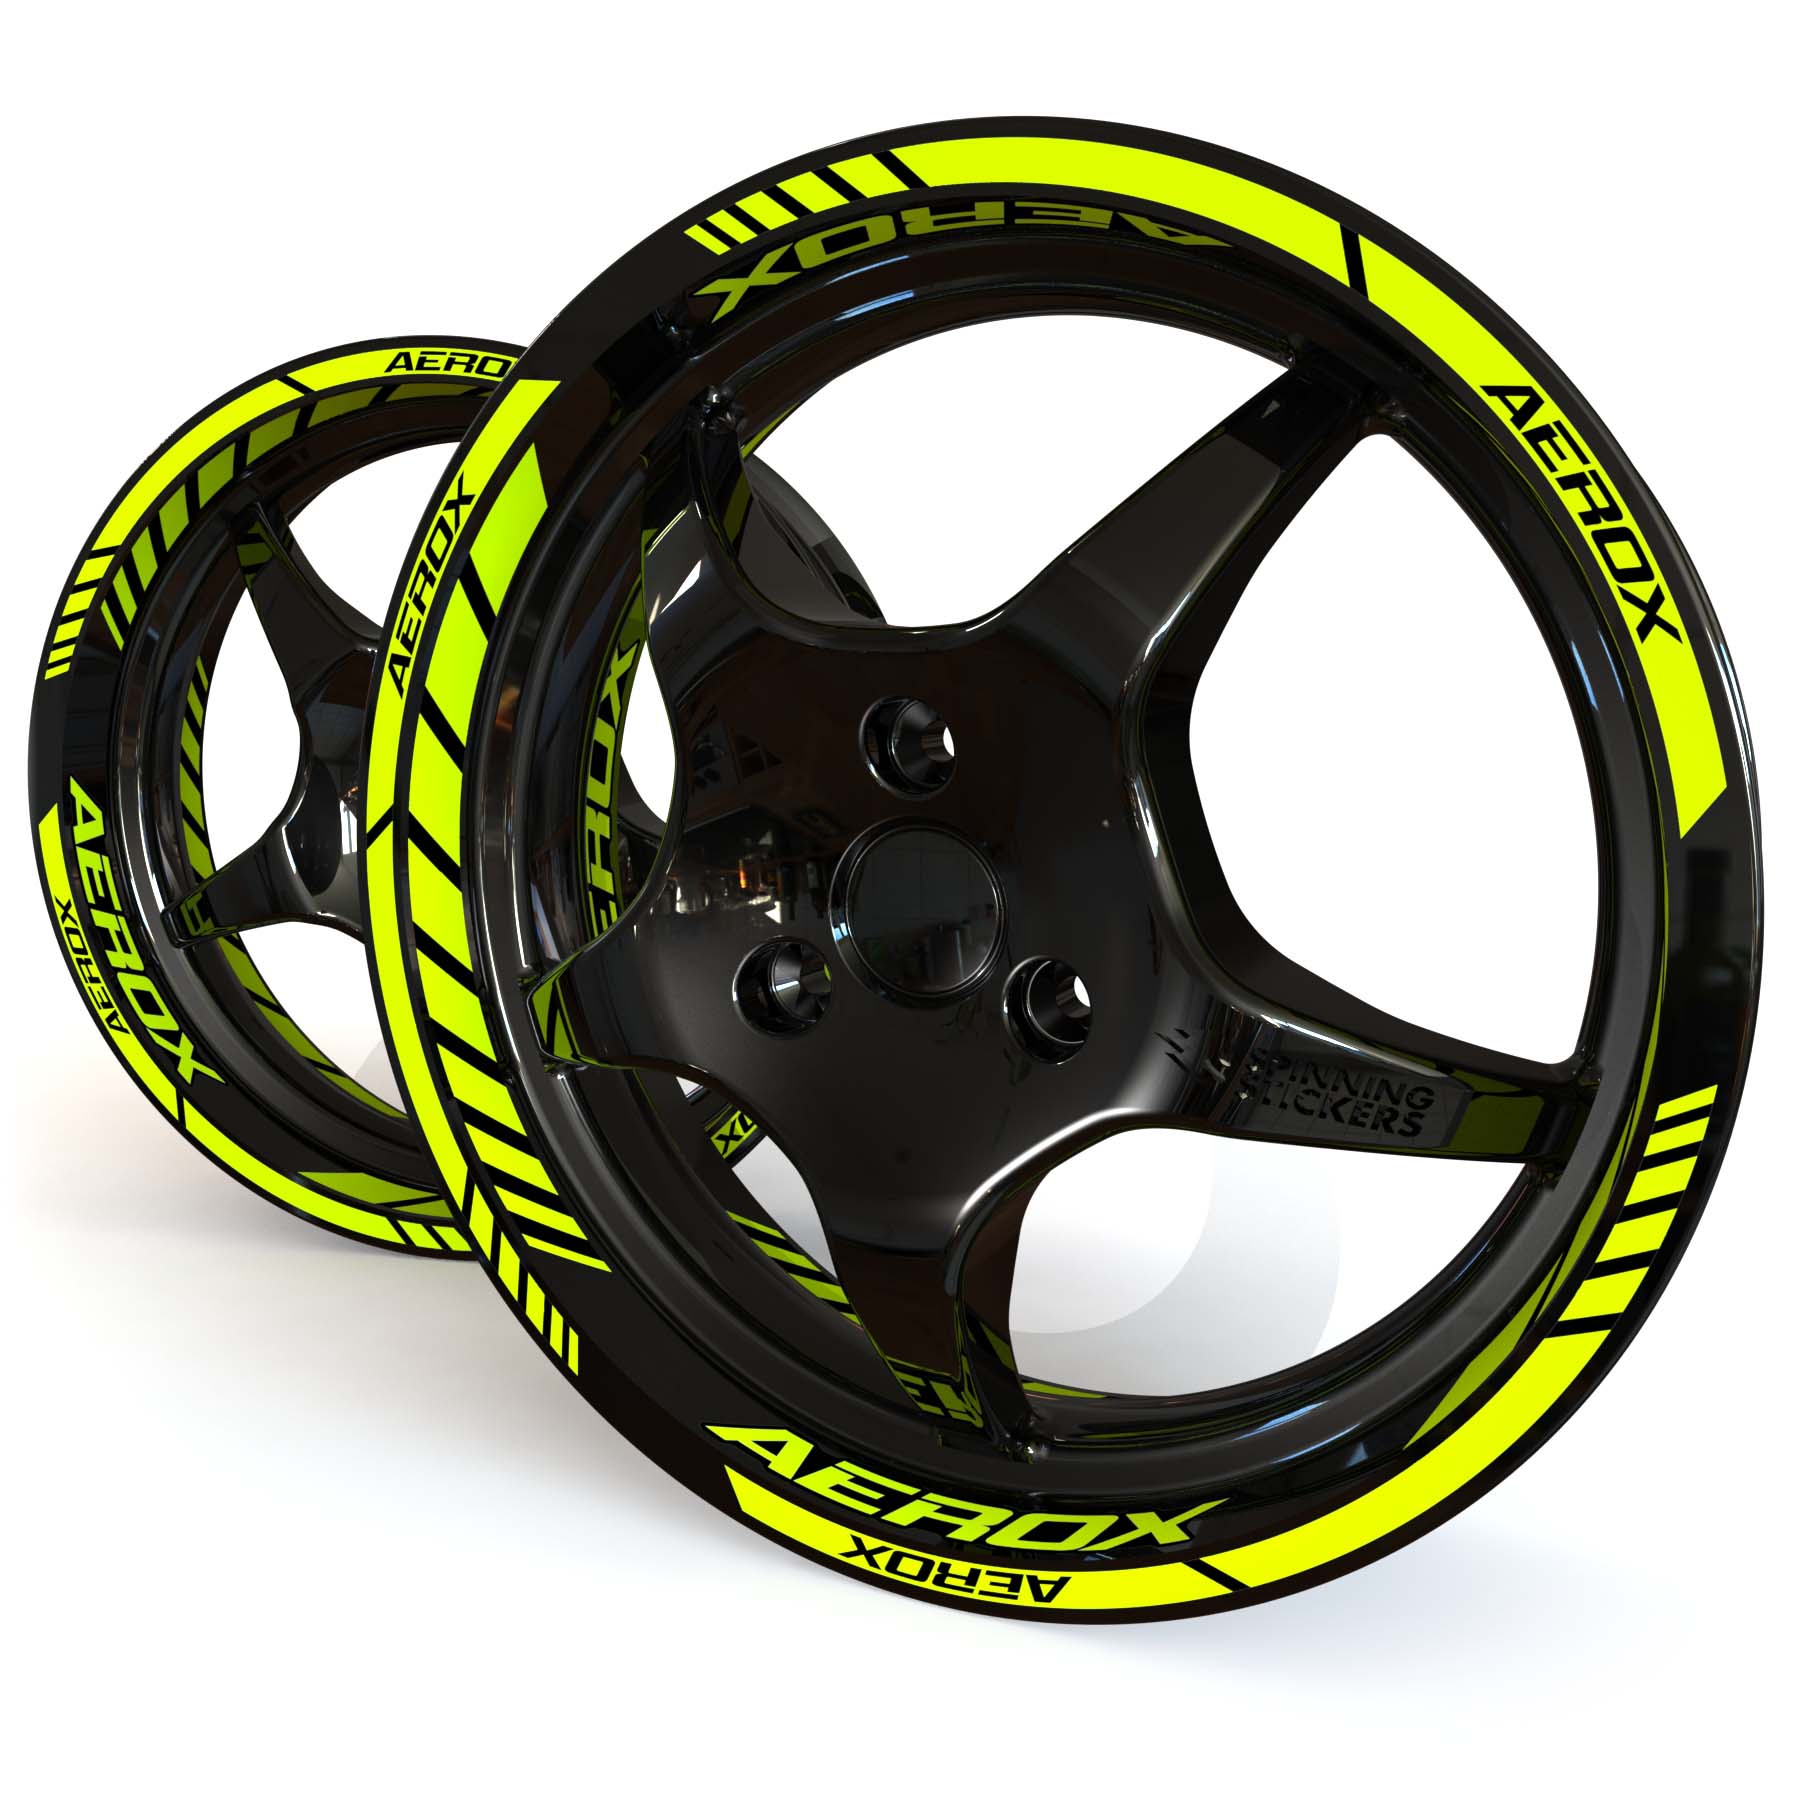 Fluorescent yellow Yamaha Aerox wheel stickers on a black 12 inch moped rim